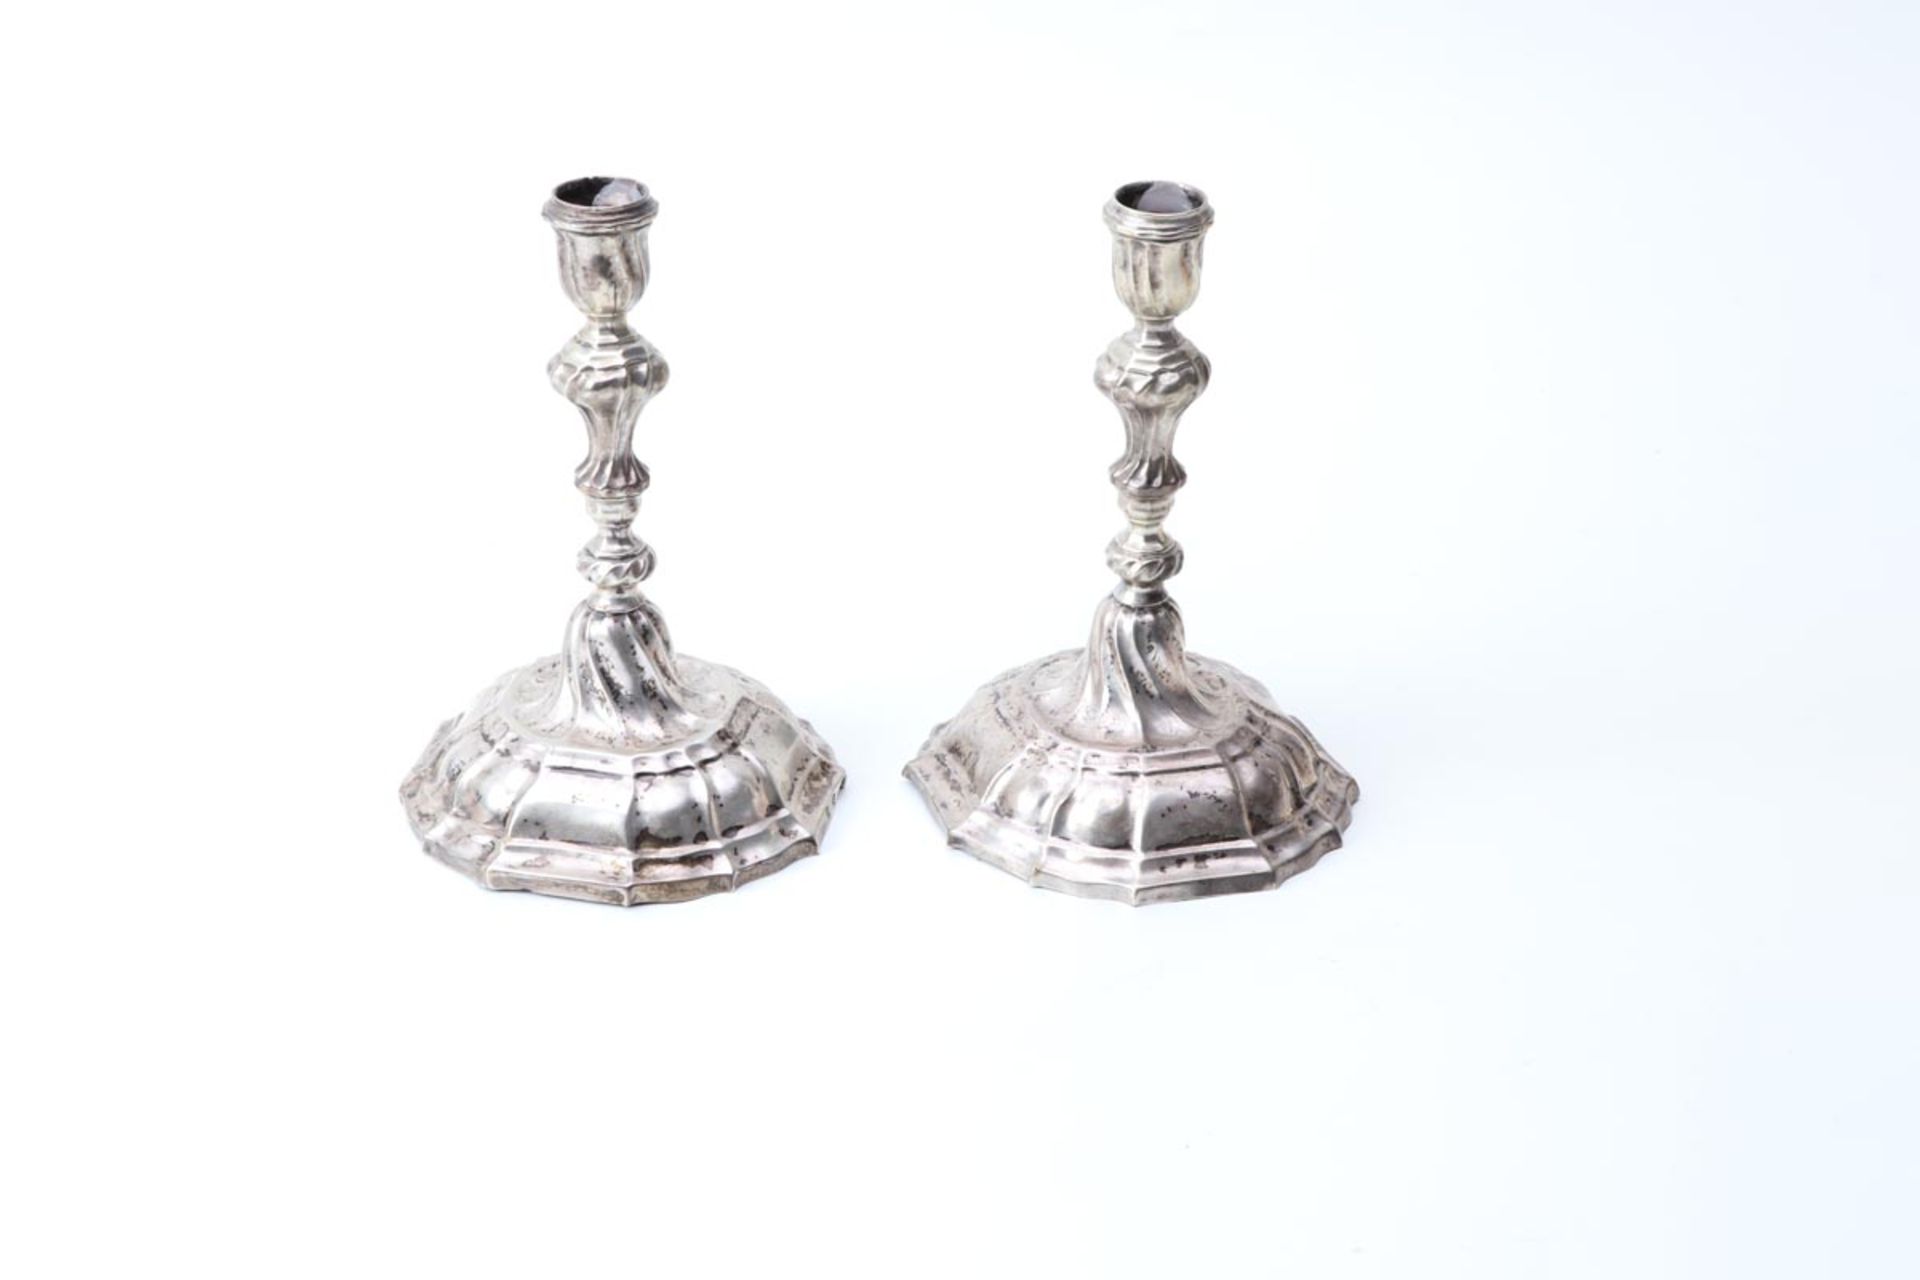 Paar Tischleuchter, Barock 18. Jh.13lötiges Silber, getrieben. Glockenförmiger getreppter Fuß,